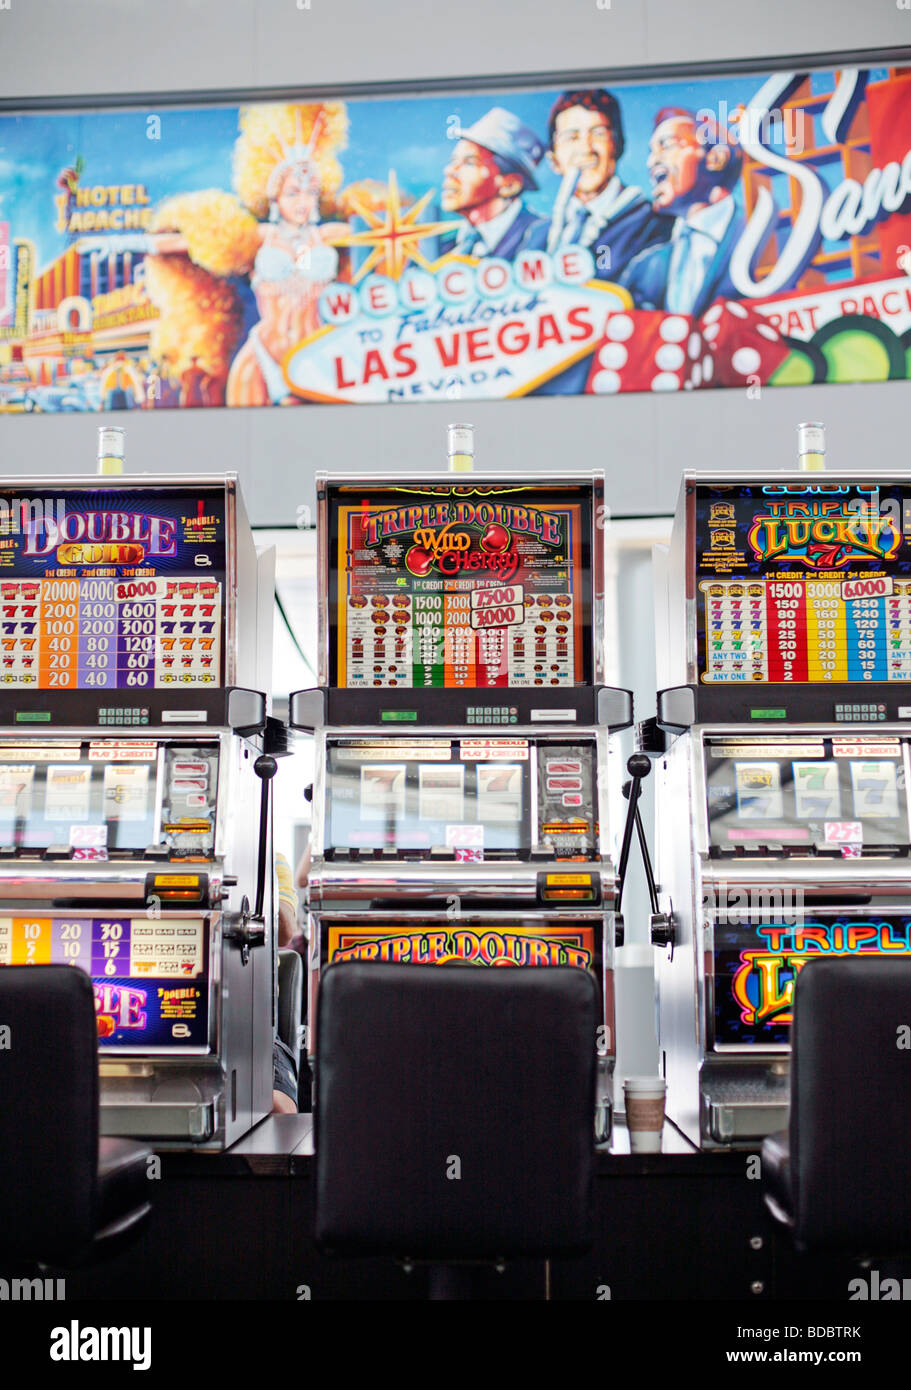 Slot machines at Las Vegas McCarran international airport, USA.</p>
<p>Stock Photo